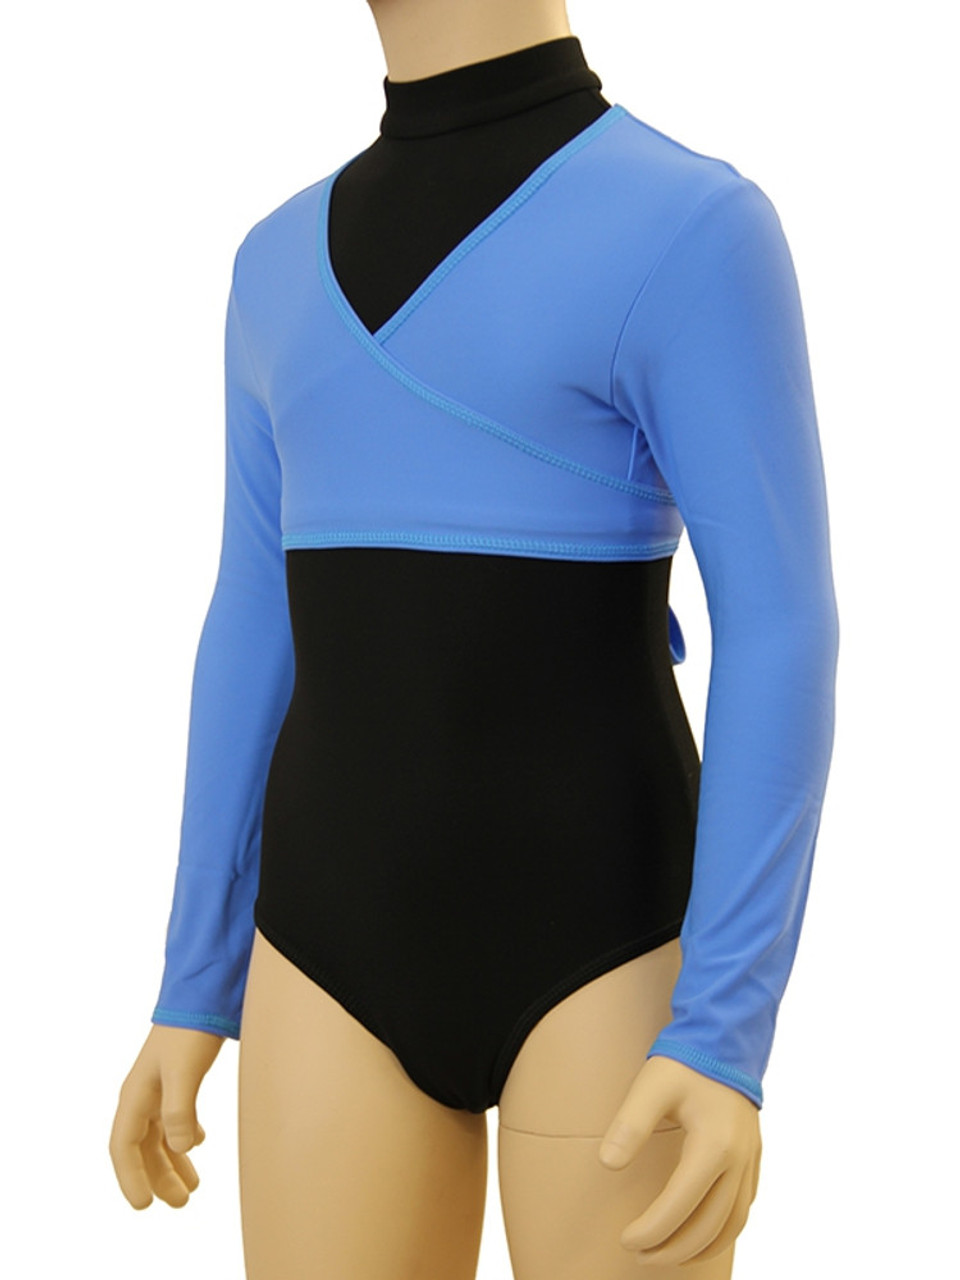 HD wallpaper: girl's in blue long-sleeved mokini, Artistic gymnastics,  weight loss